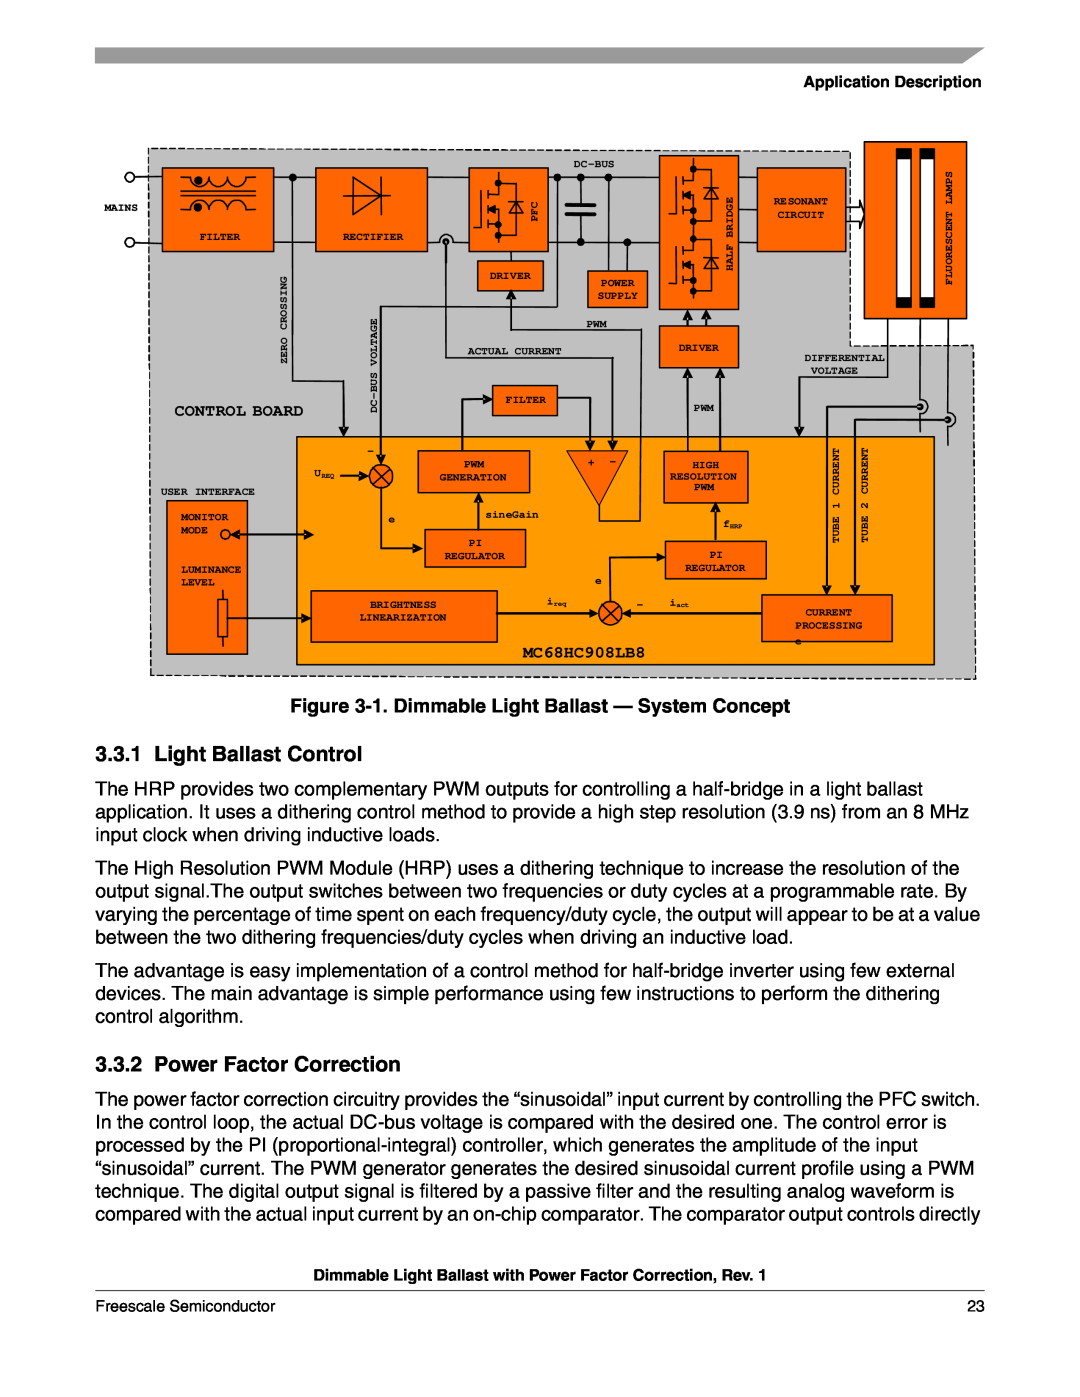 Freescale Semiconductor M68HC08 manual Light Ballast Control, Power Factor Correction, Control Board, MC68HC908LB8 